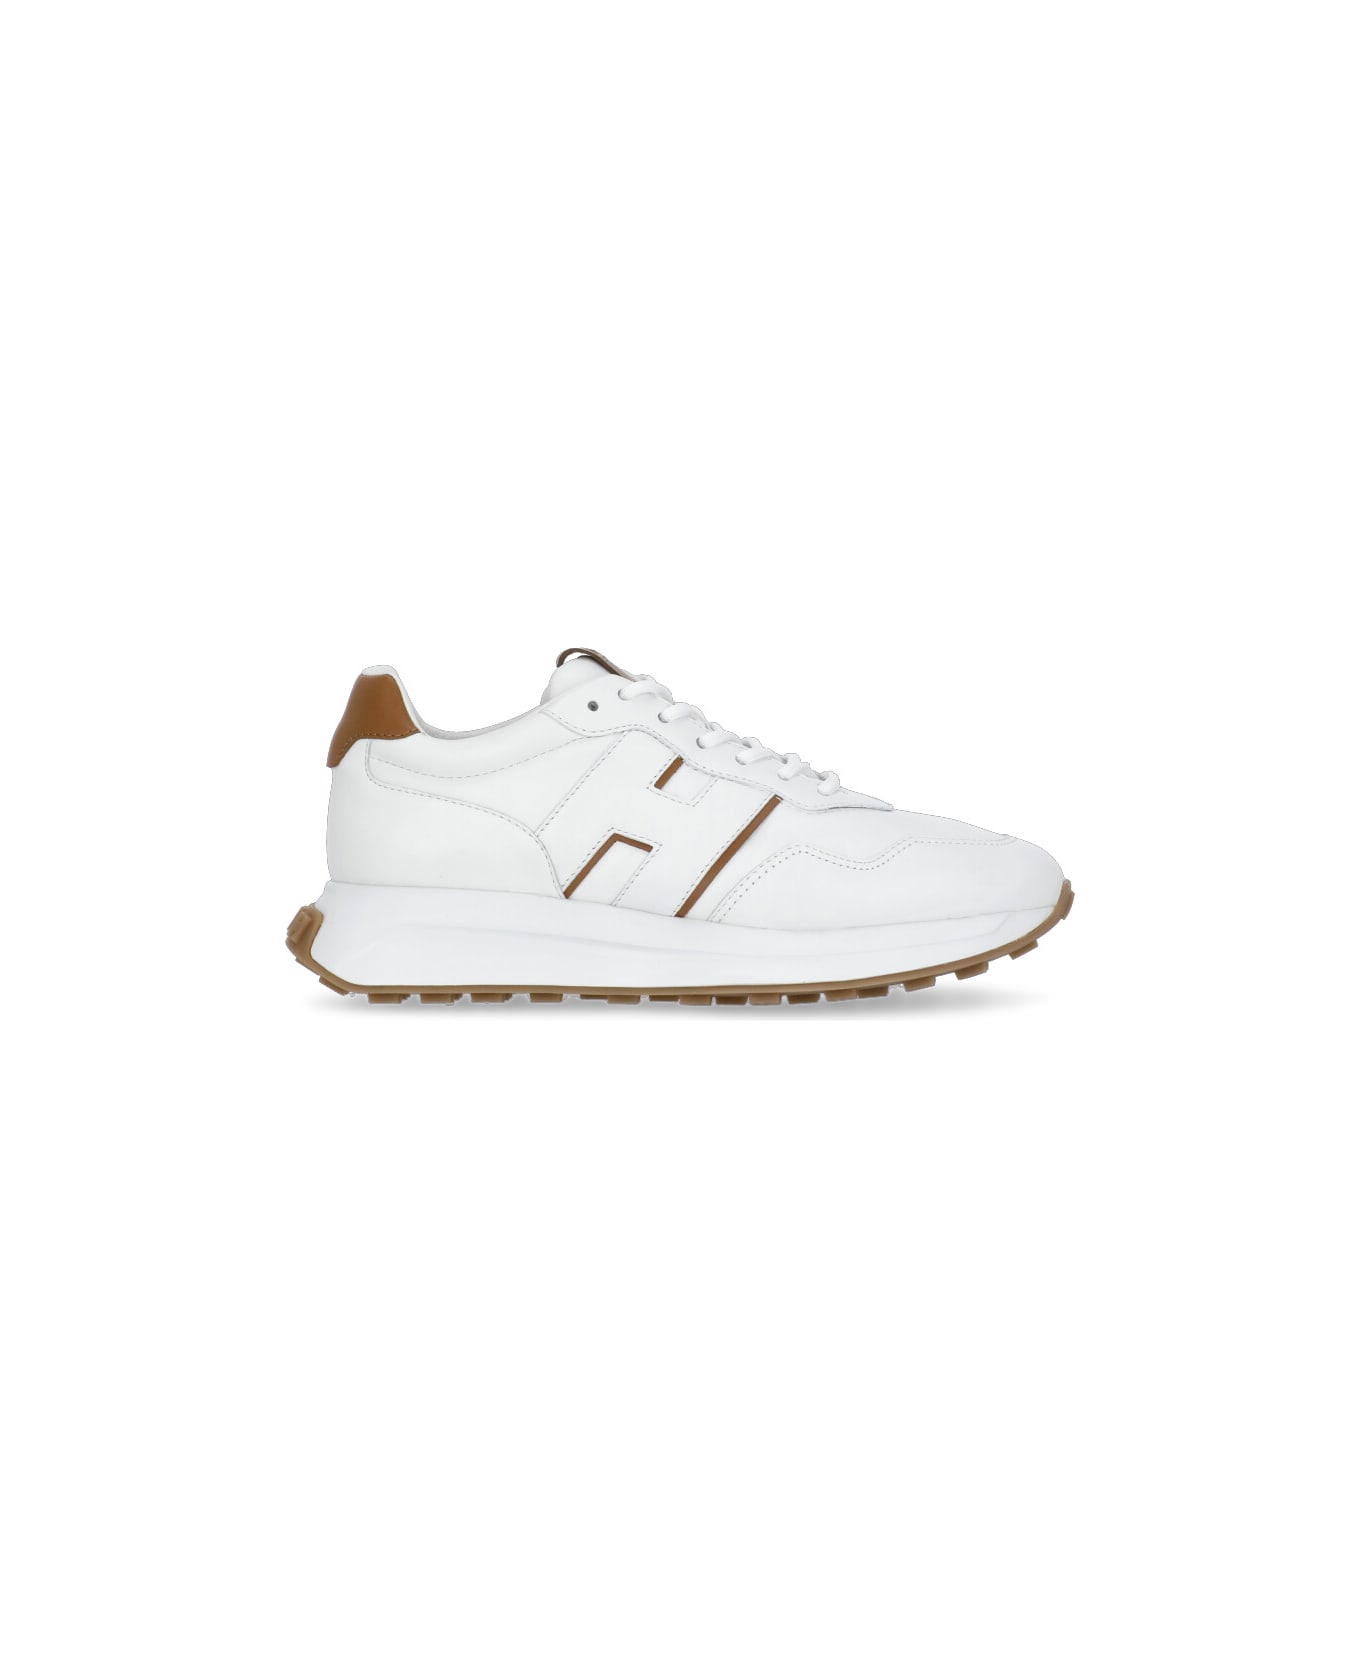 Hogan H641 Sneakers - White